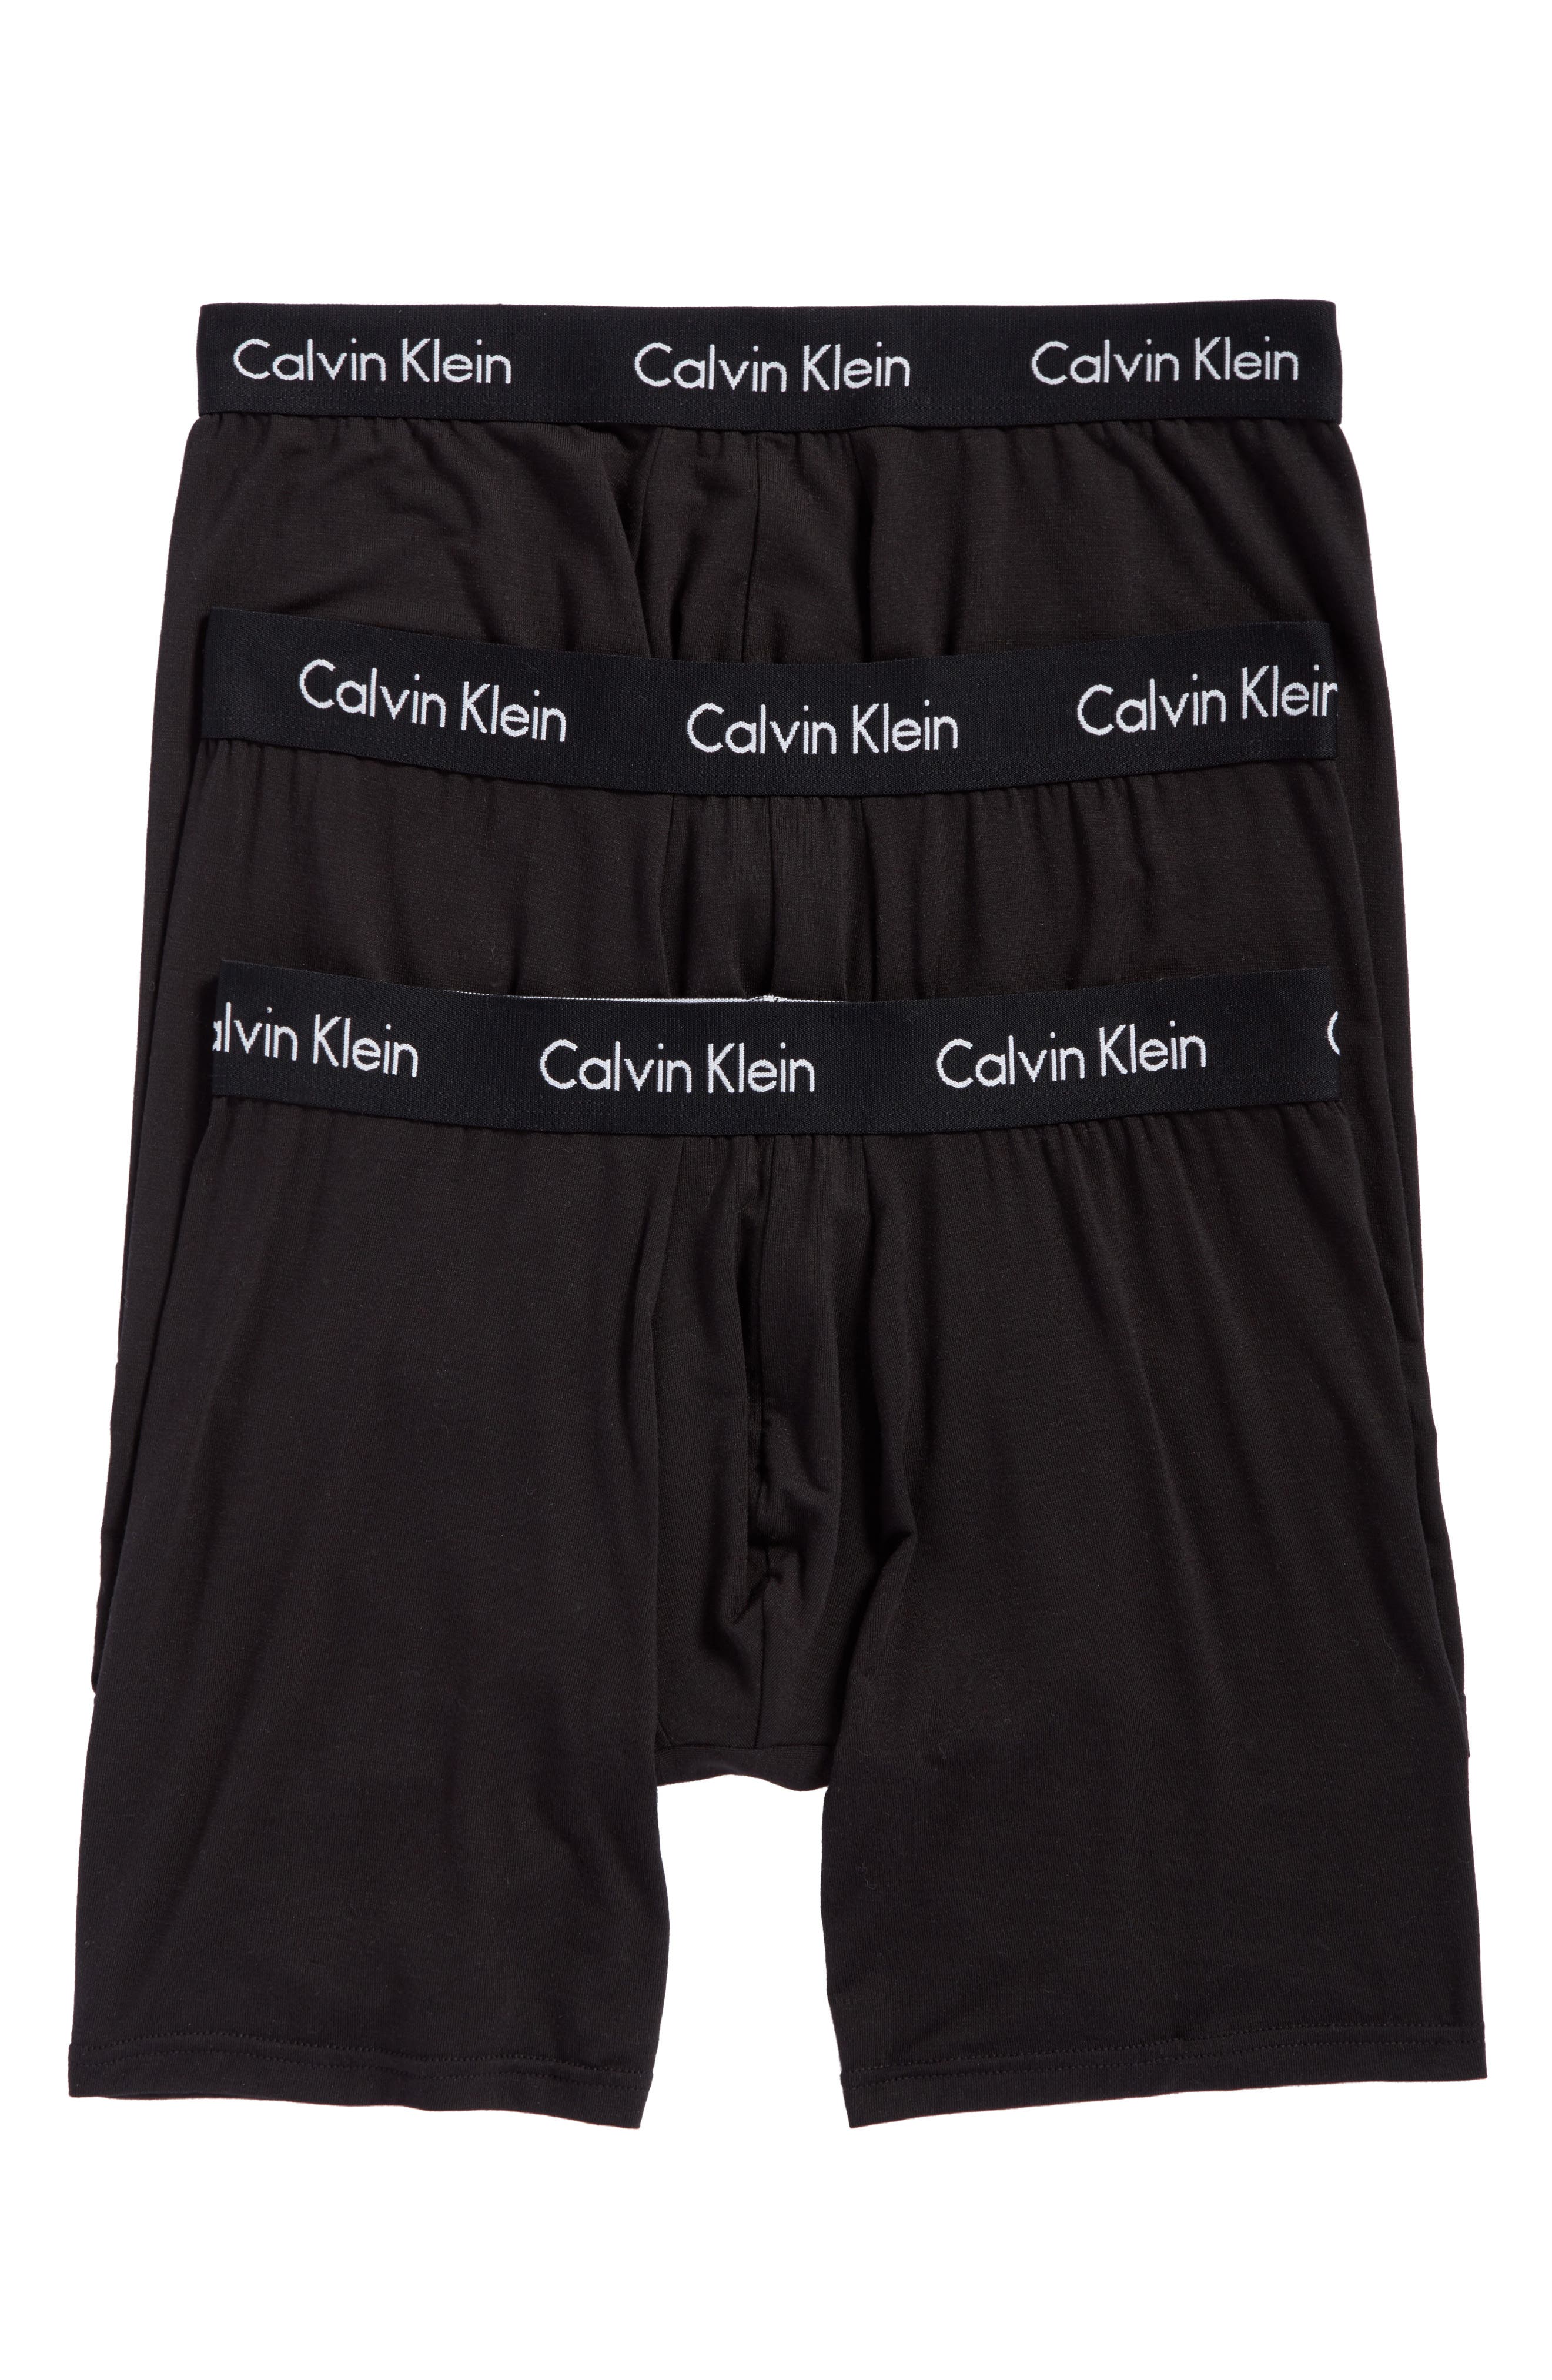 calvin klein pyjama bottoms womens